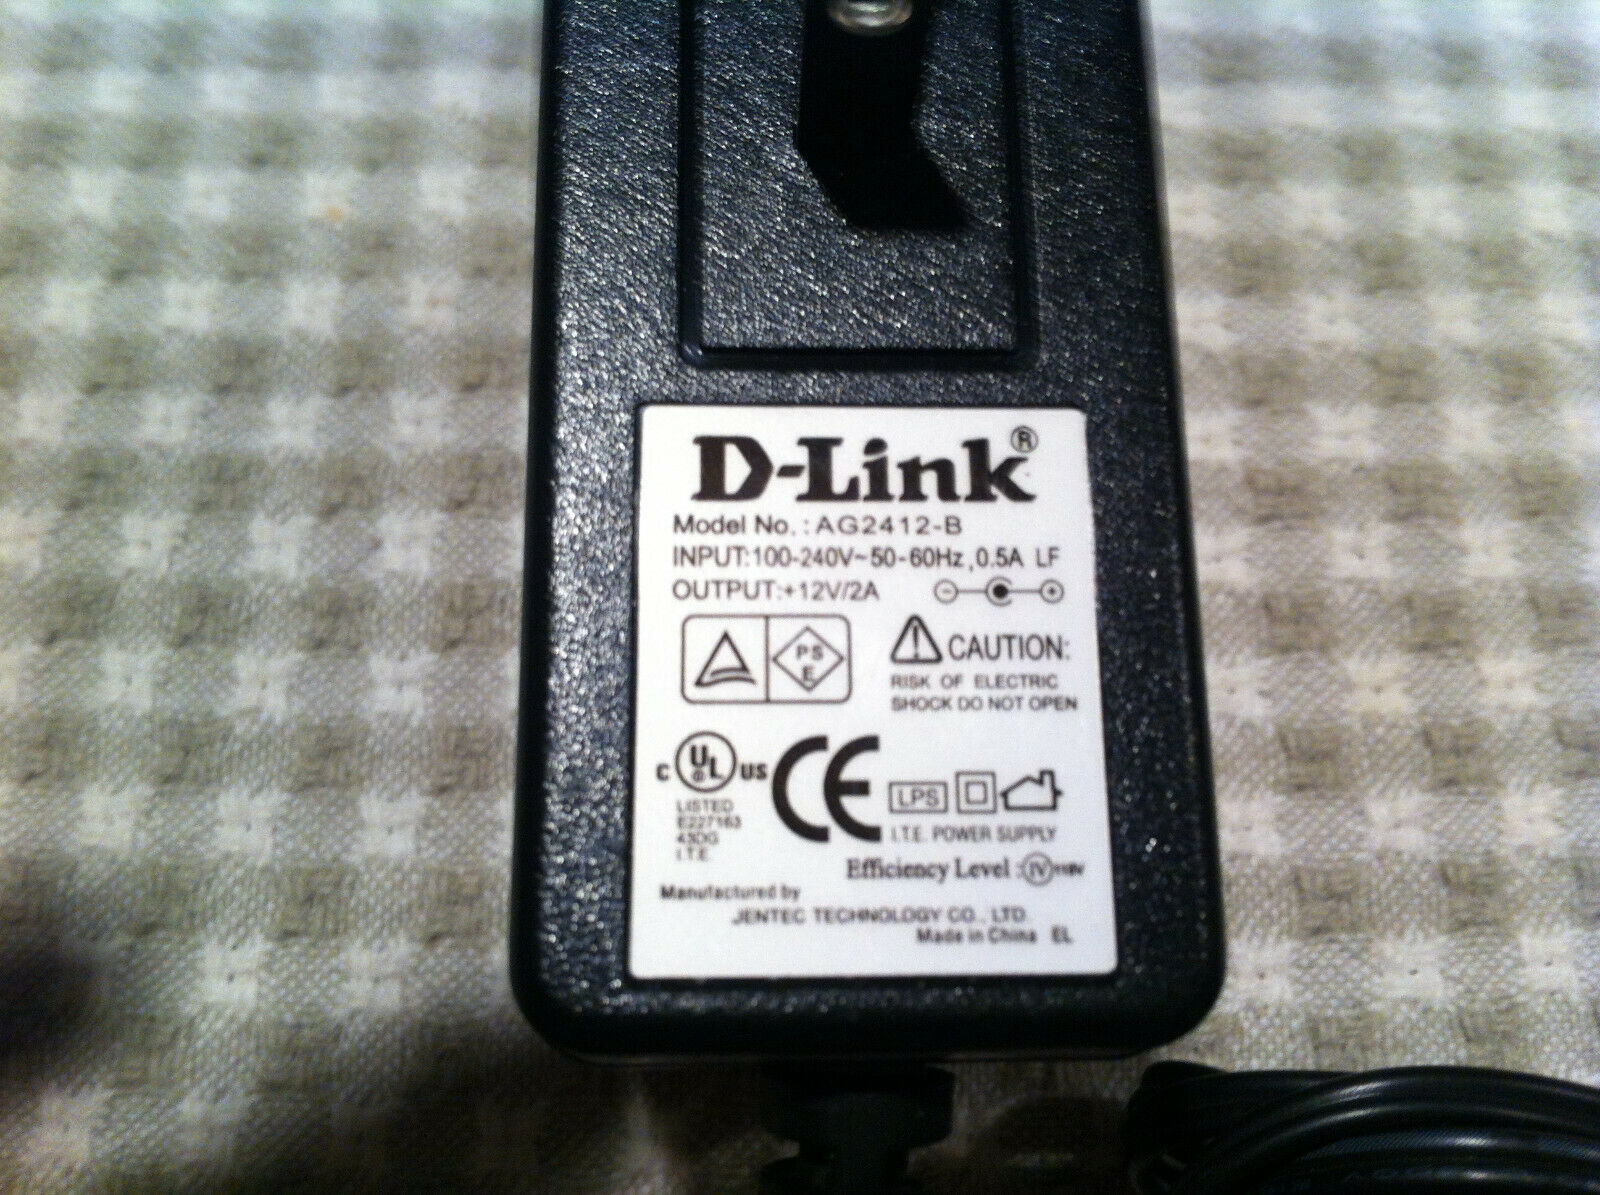 NEW 12V 2A D-Link AG2412-B ac adapter for D-Link DIR-655 Router Switching Power